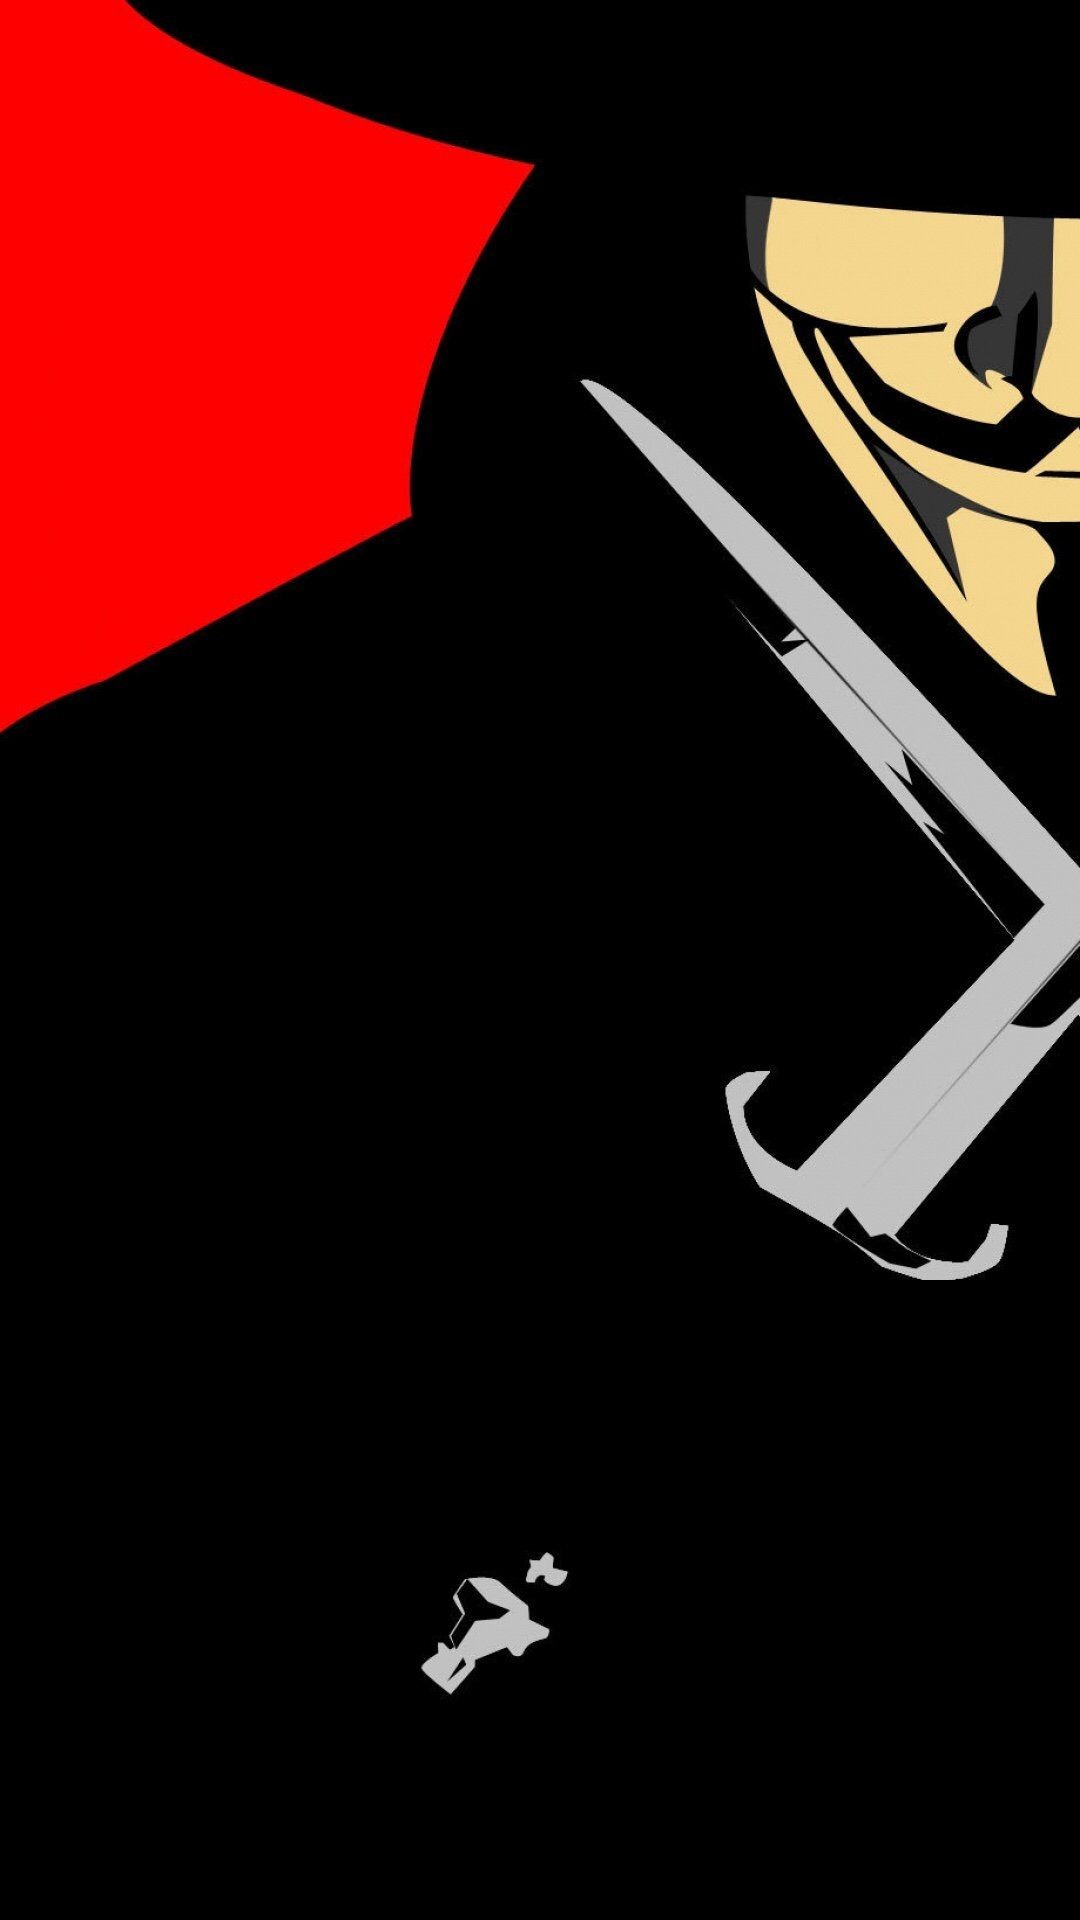 1080x1920 Anonymous Mask, Iphone 6 Wallpaper, Phone Backgrounds, V For Vendetta, Masks  Art